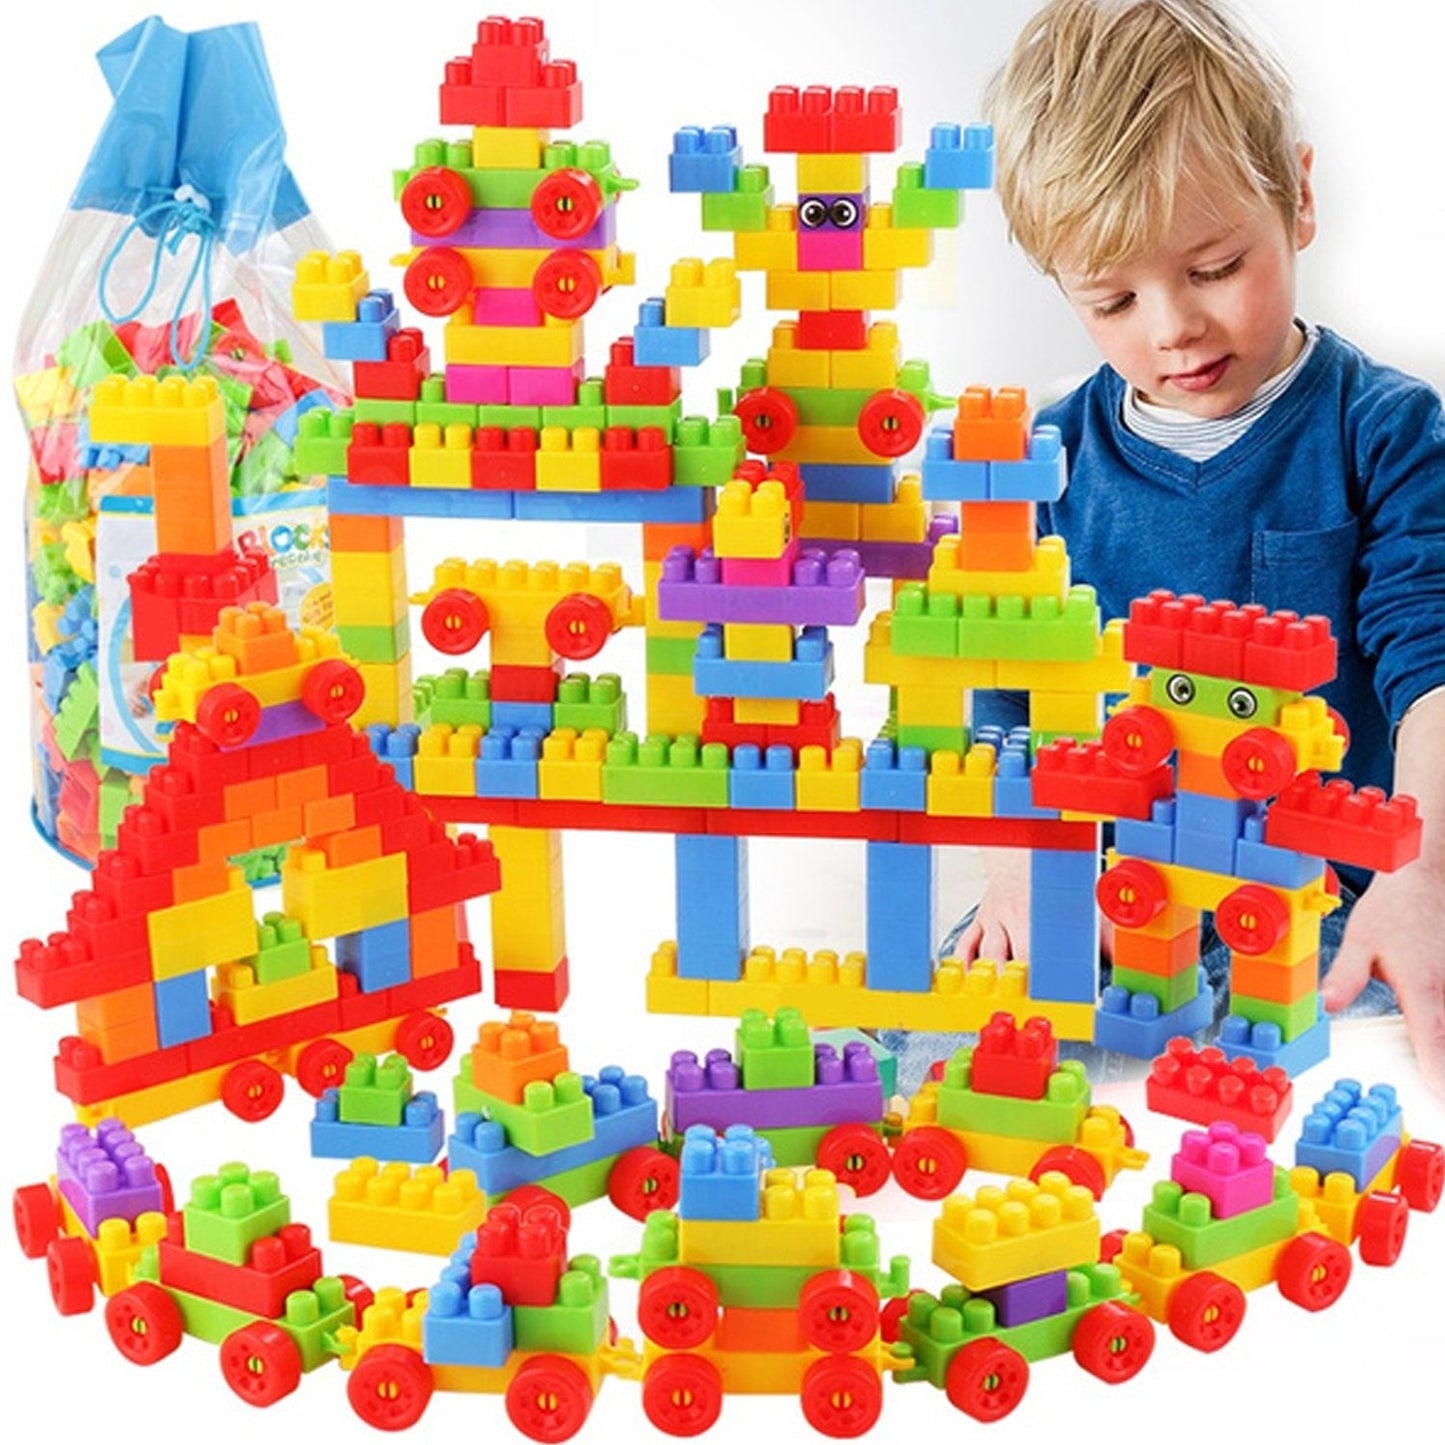 Blocks for Kids House Construction Building